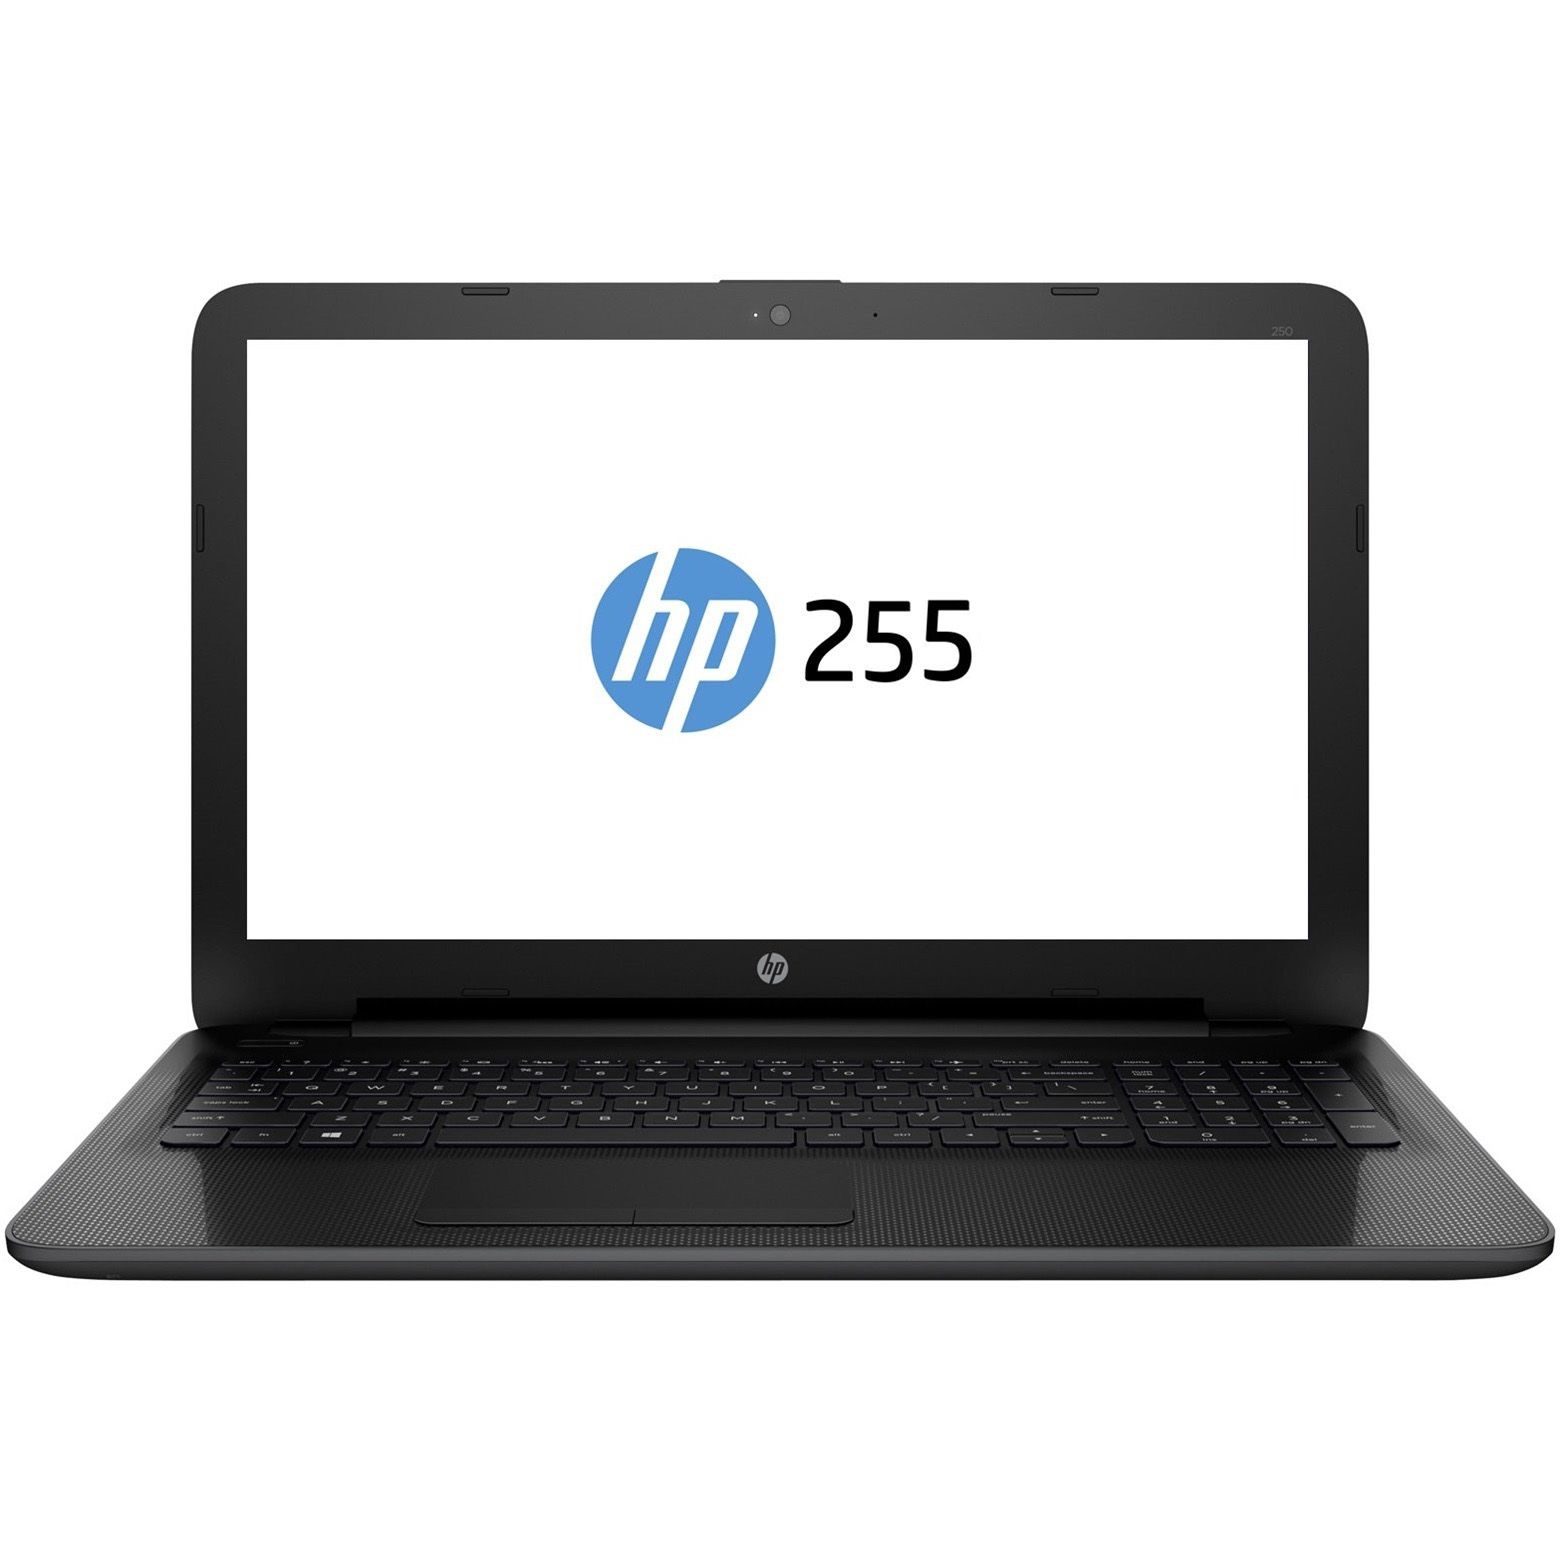  Laptop HP 255 G5, AMD E2-7110, 4GB DDR3, HDD 500GB, Intel HD Graphics, Free DOS 